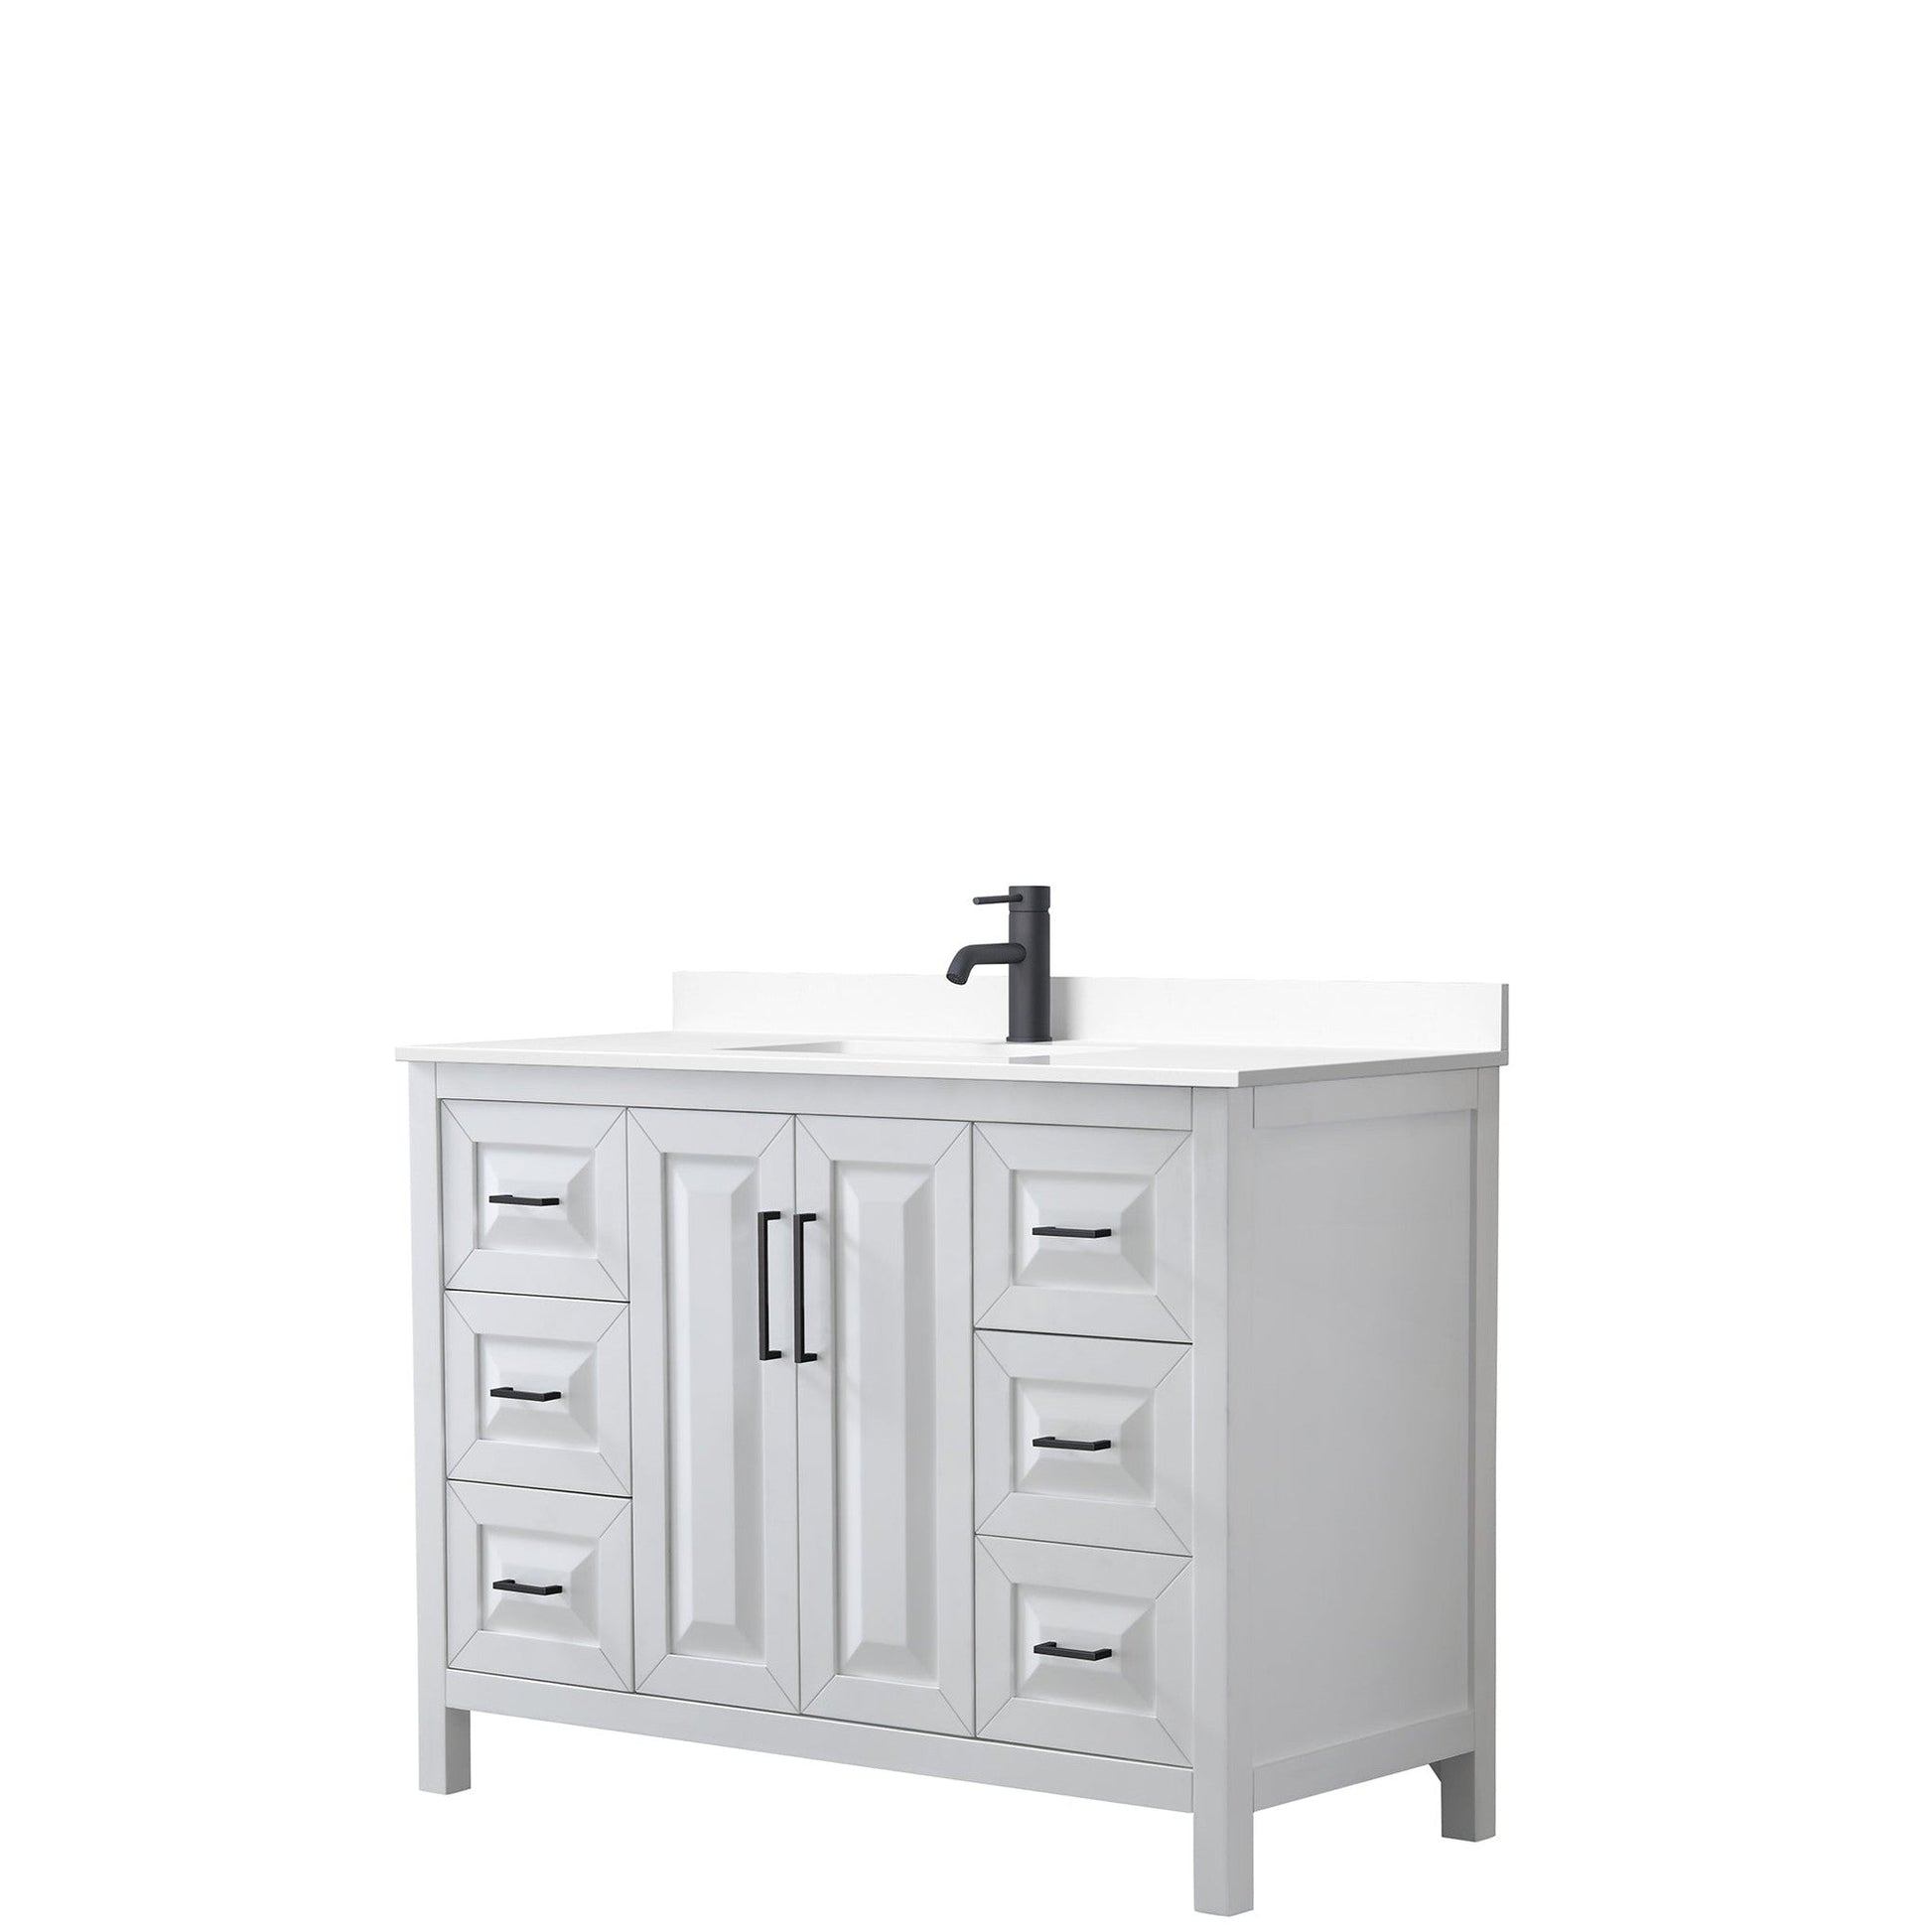 Daria 48" Single Bathroom Vanity in White, White Cultured Marble Countertop, Undermount Square Sink, Matte Black Trim